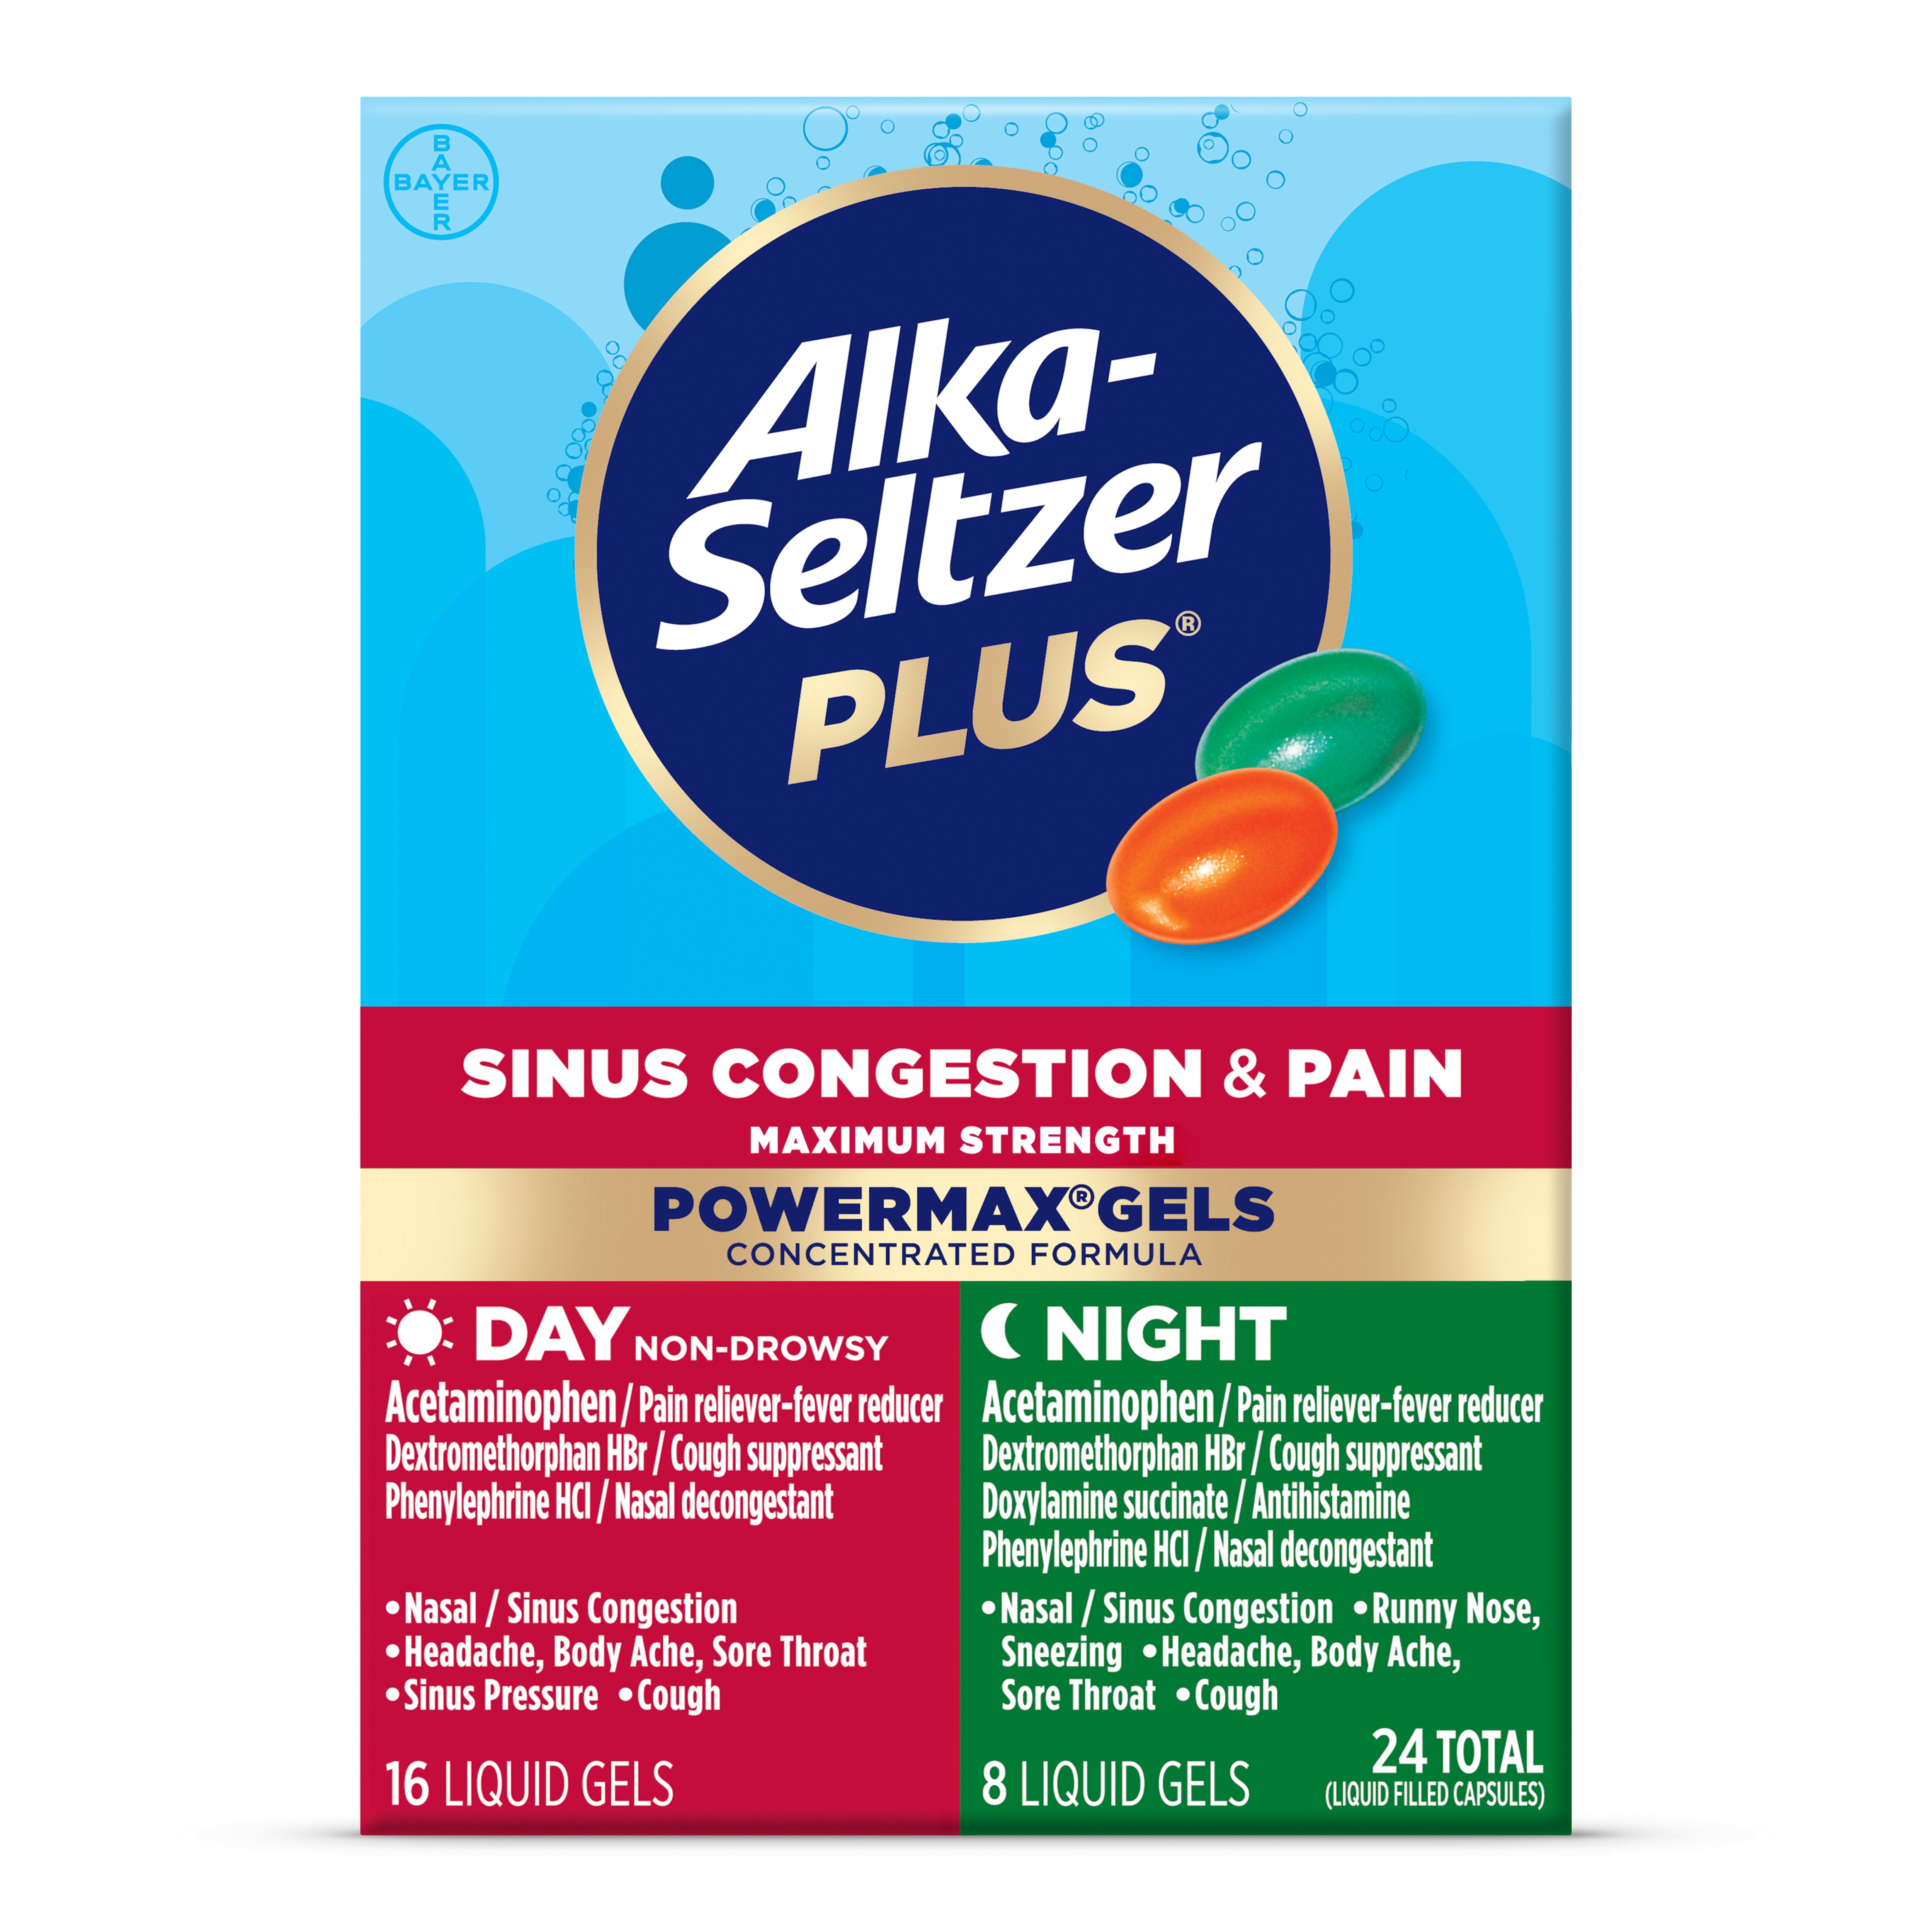 Alka-Seltzer Plus Maximum Strength Sinus Congestion & Pain PowerMax Gels Day & Night Combo Pack, 24 Ct , CVS